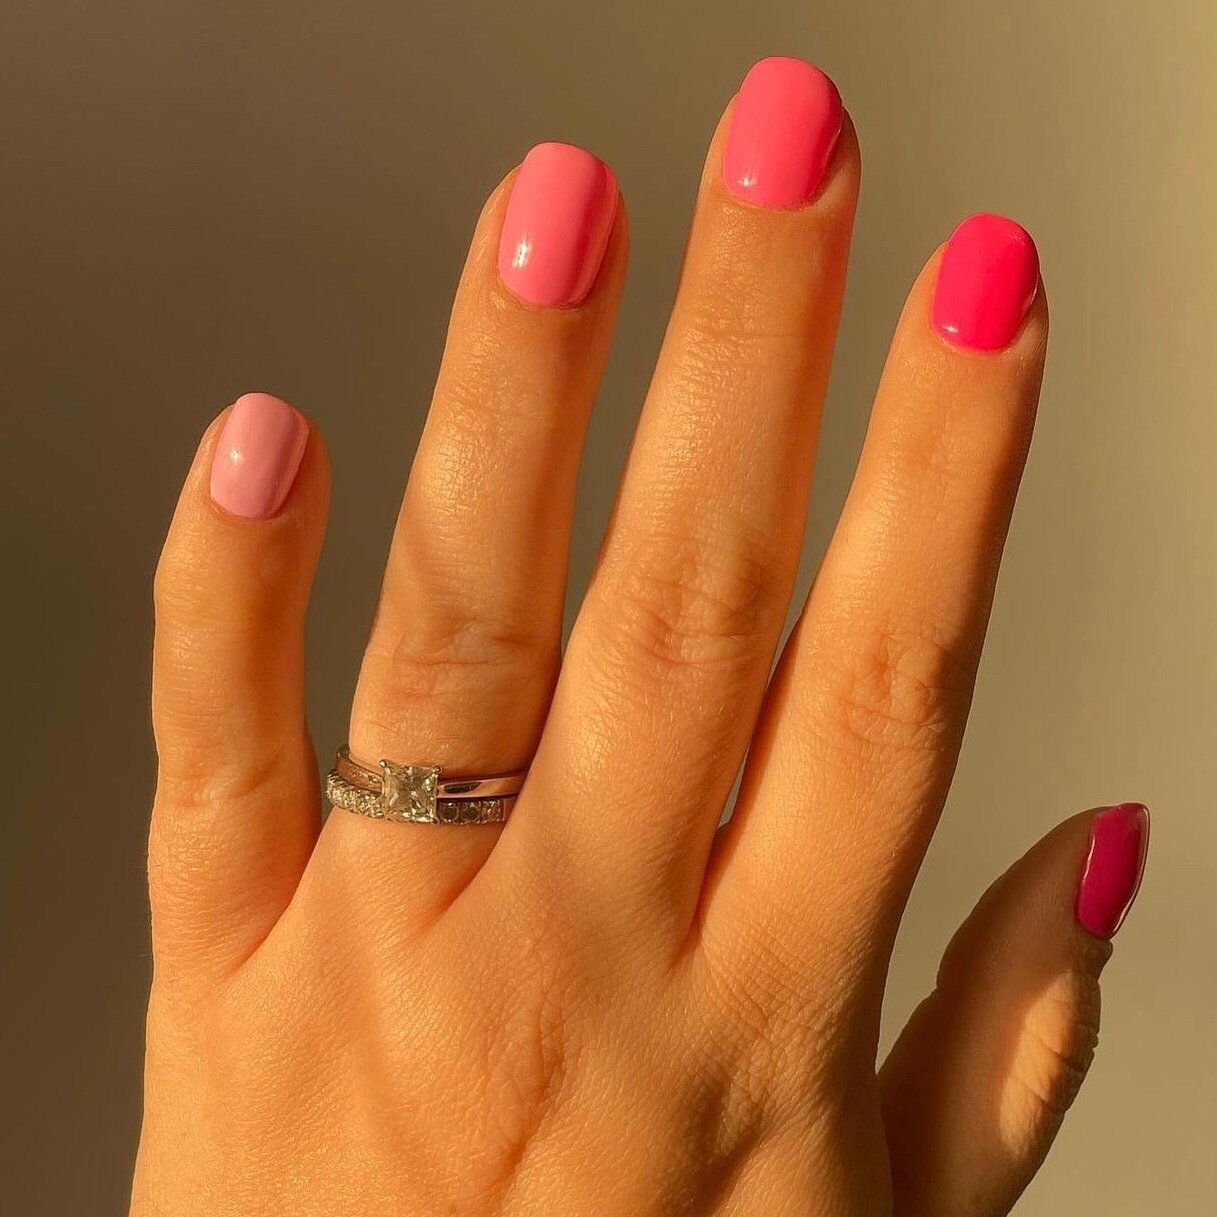 Pink Nails Are Back 🎀 

#thegelbottle #chandlersfordsalon #bellissimabeauty #hampshiresalon